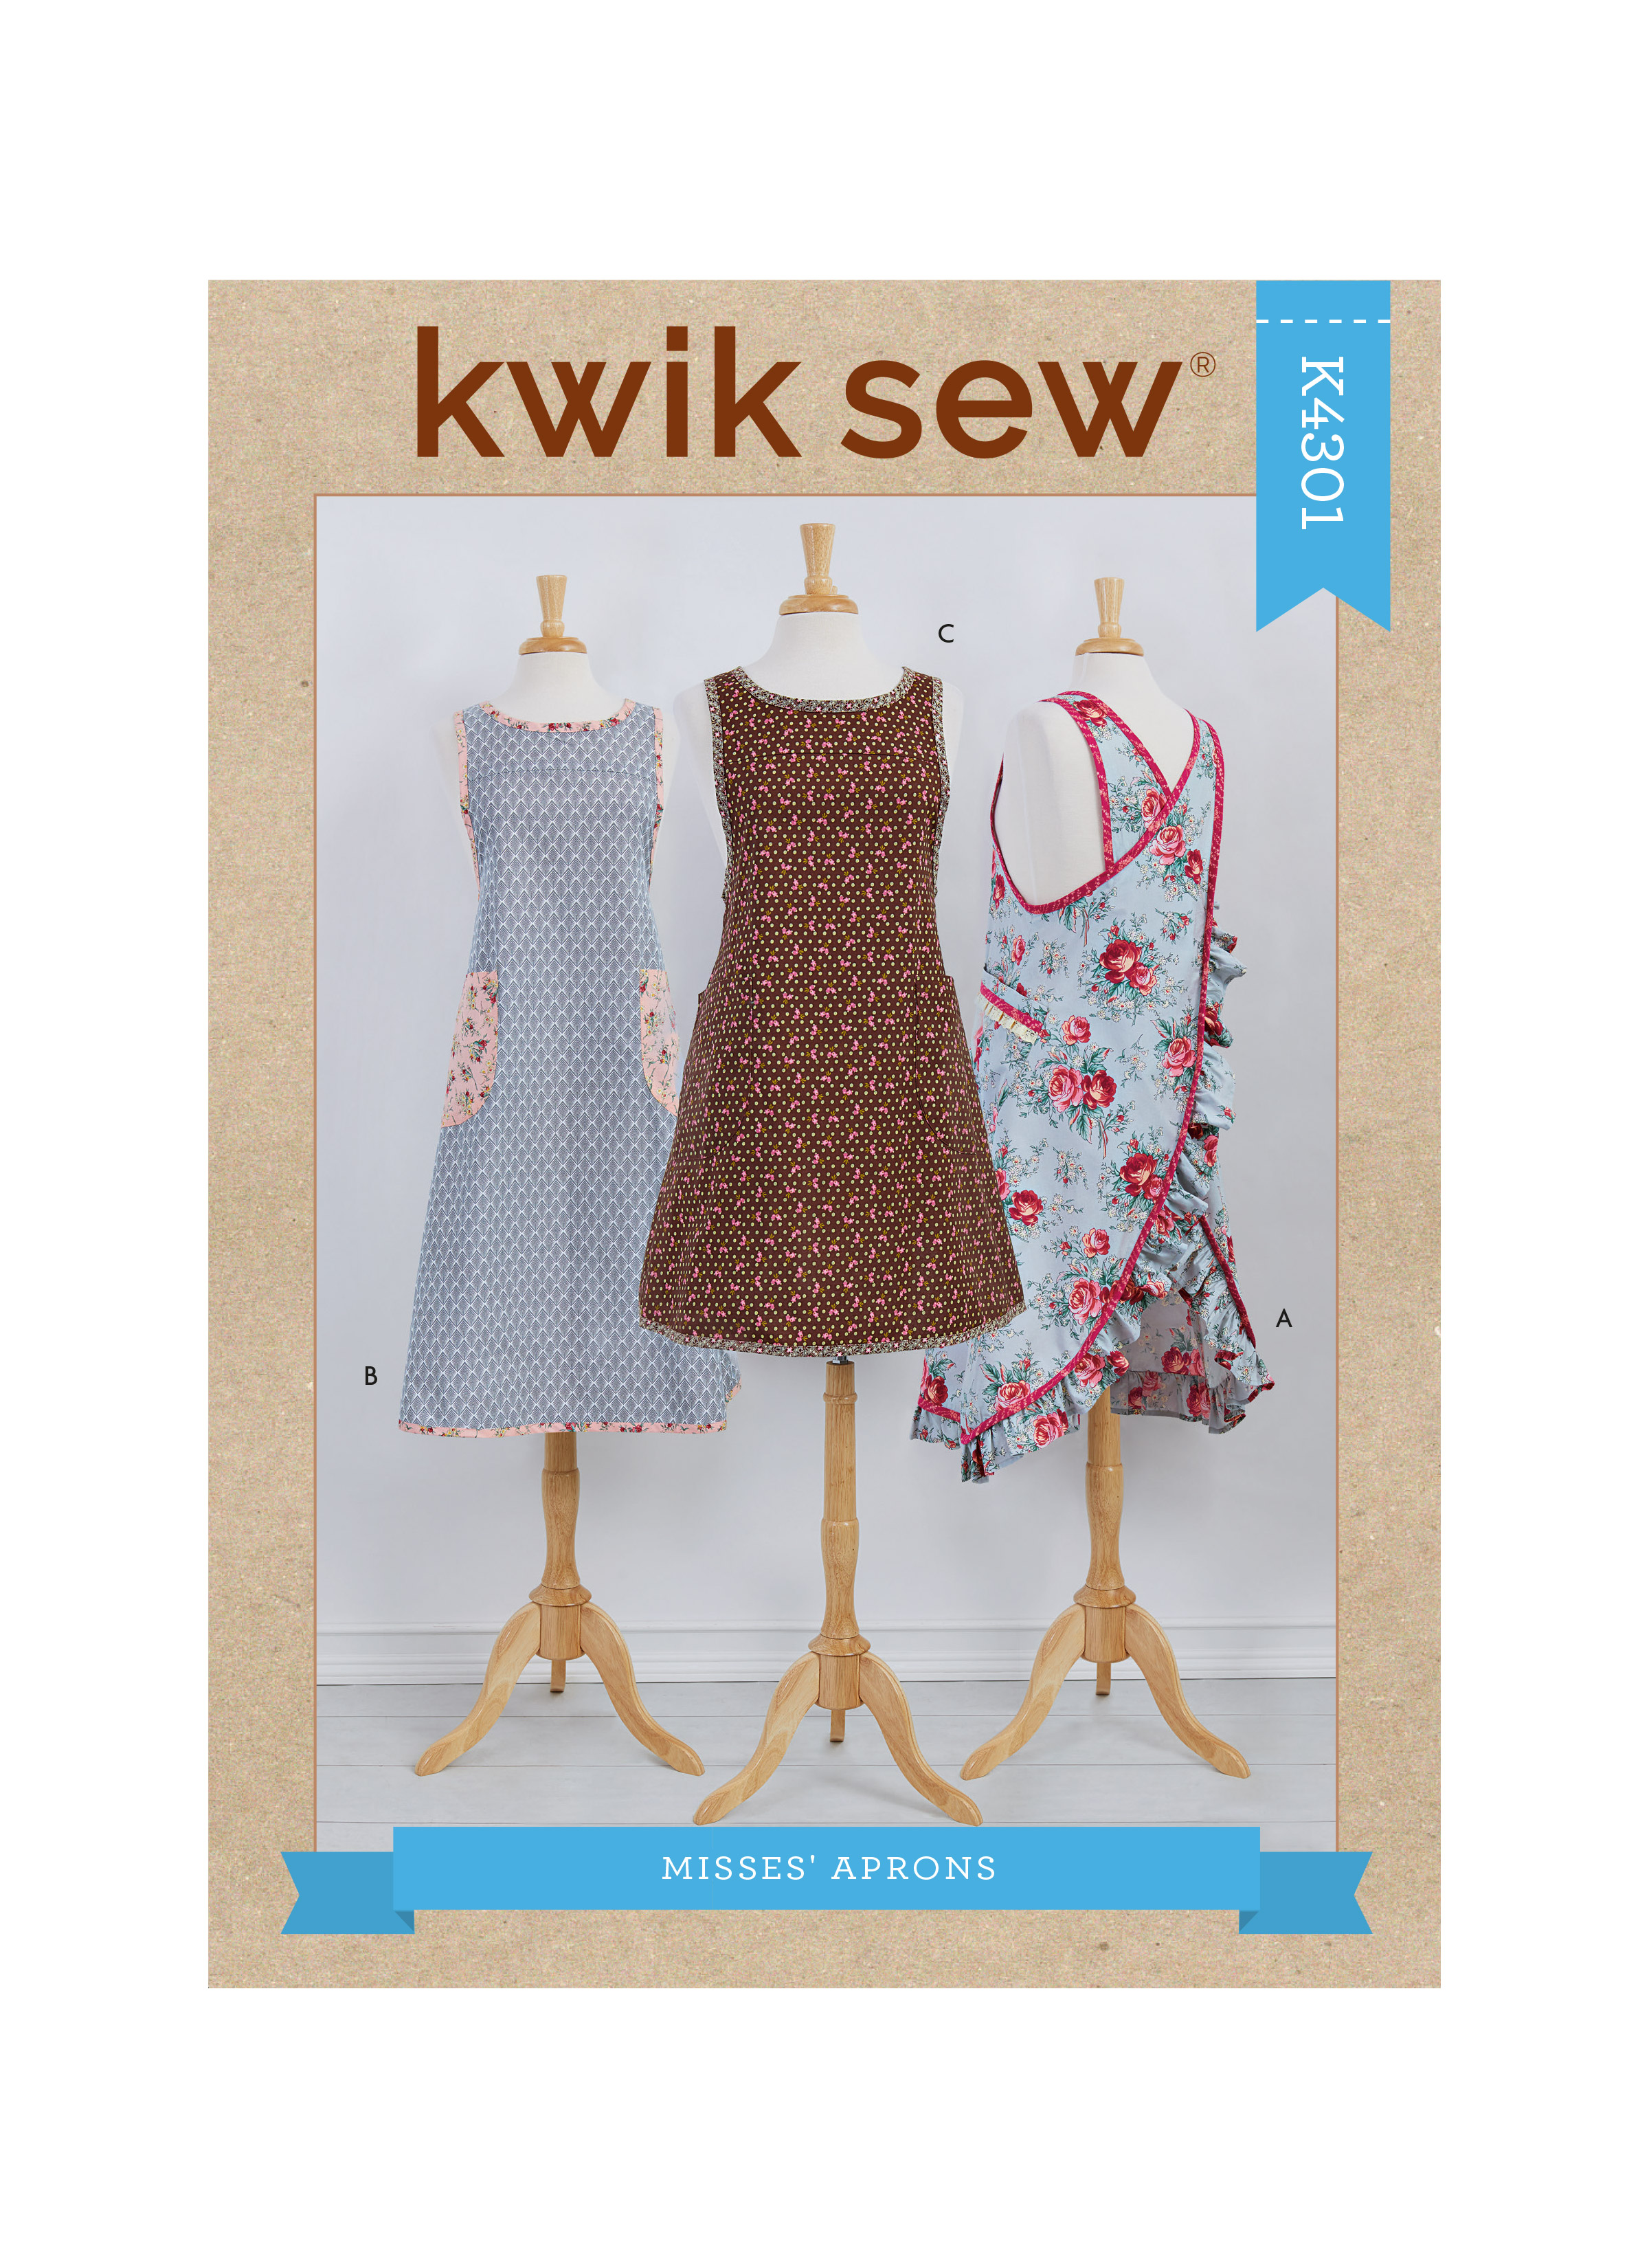 Kwik Sew 941, Vintage Sewing Patterns